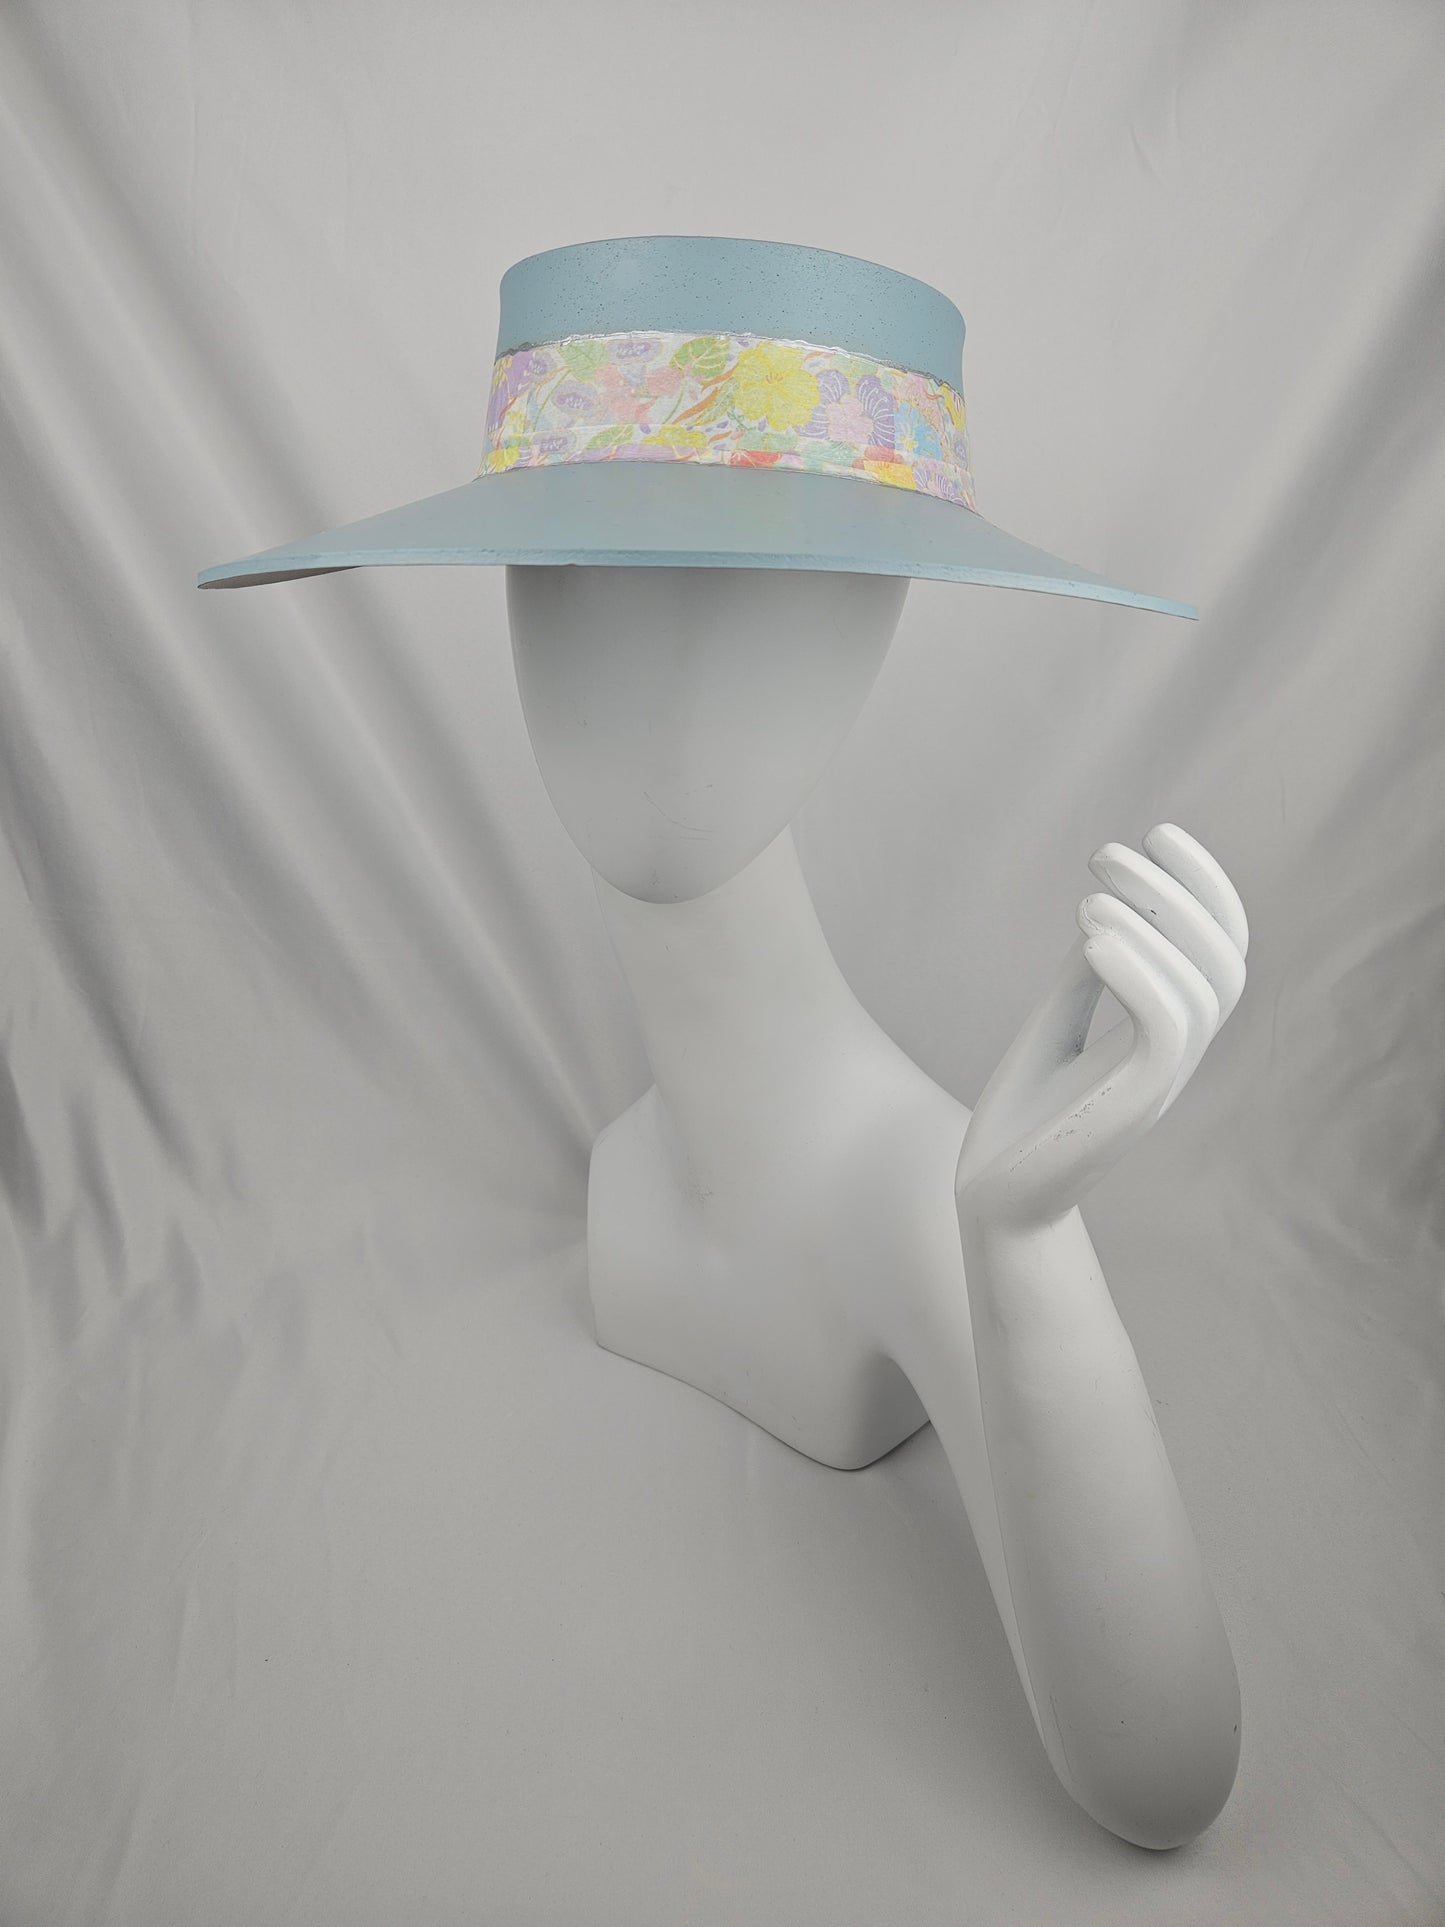 Tall Soft Blue Audrey Foam Sun Visor Hat with Bright Pastel Floral Band: 1950s, Walks, Brunch, Asian, Golf, Easter, Church, No Headache, Derby